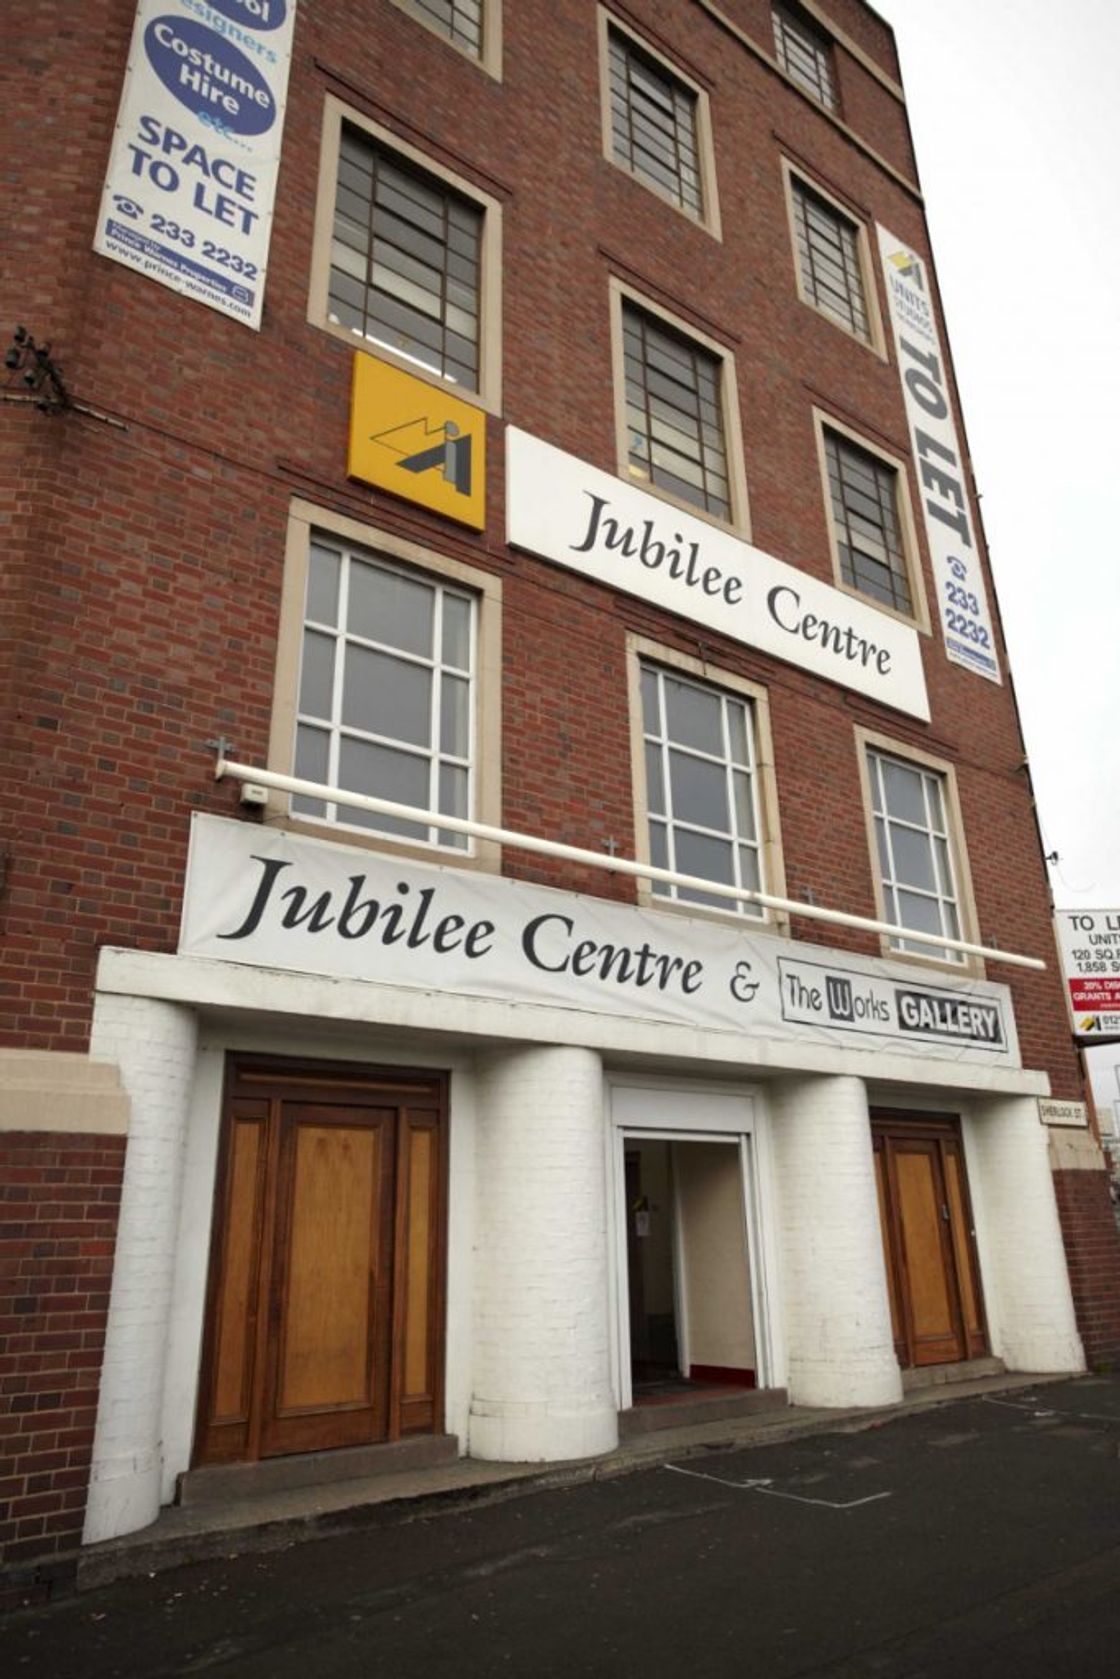 Jubilee Centre 130 Pershore Street, Birmingham B5 6ND